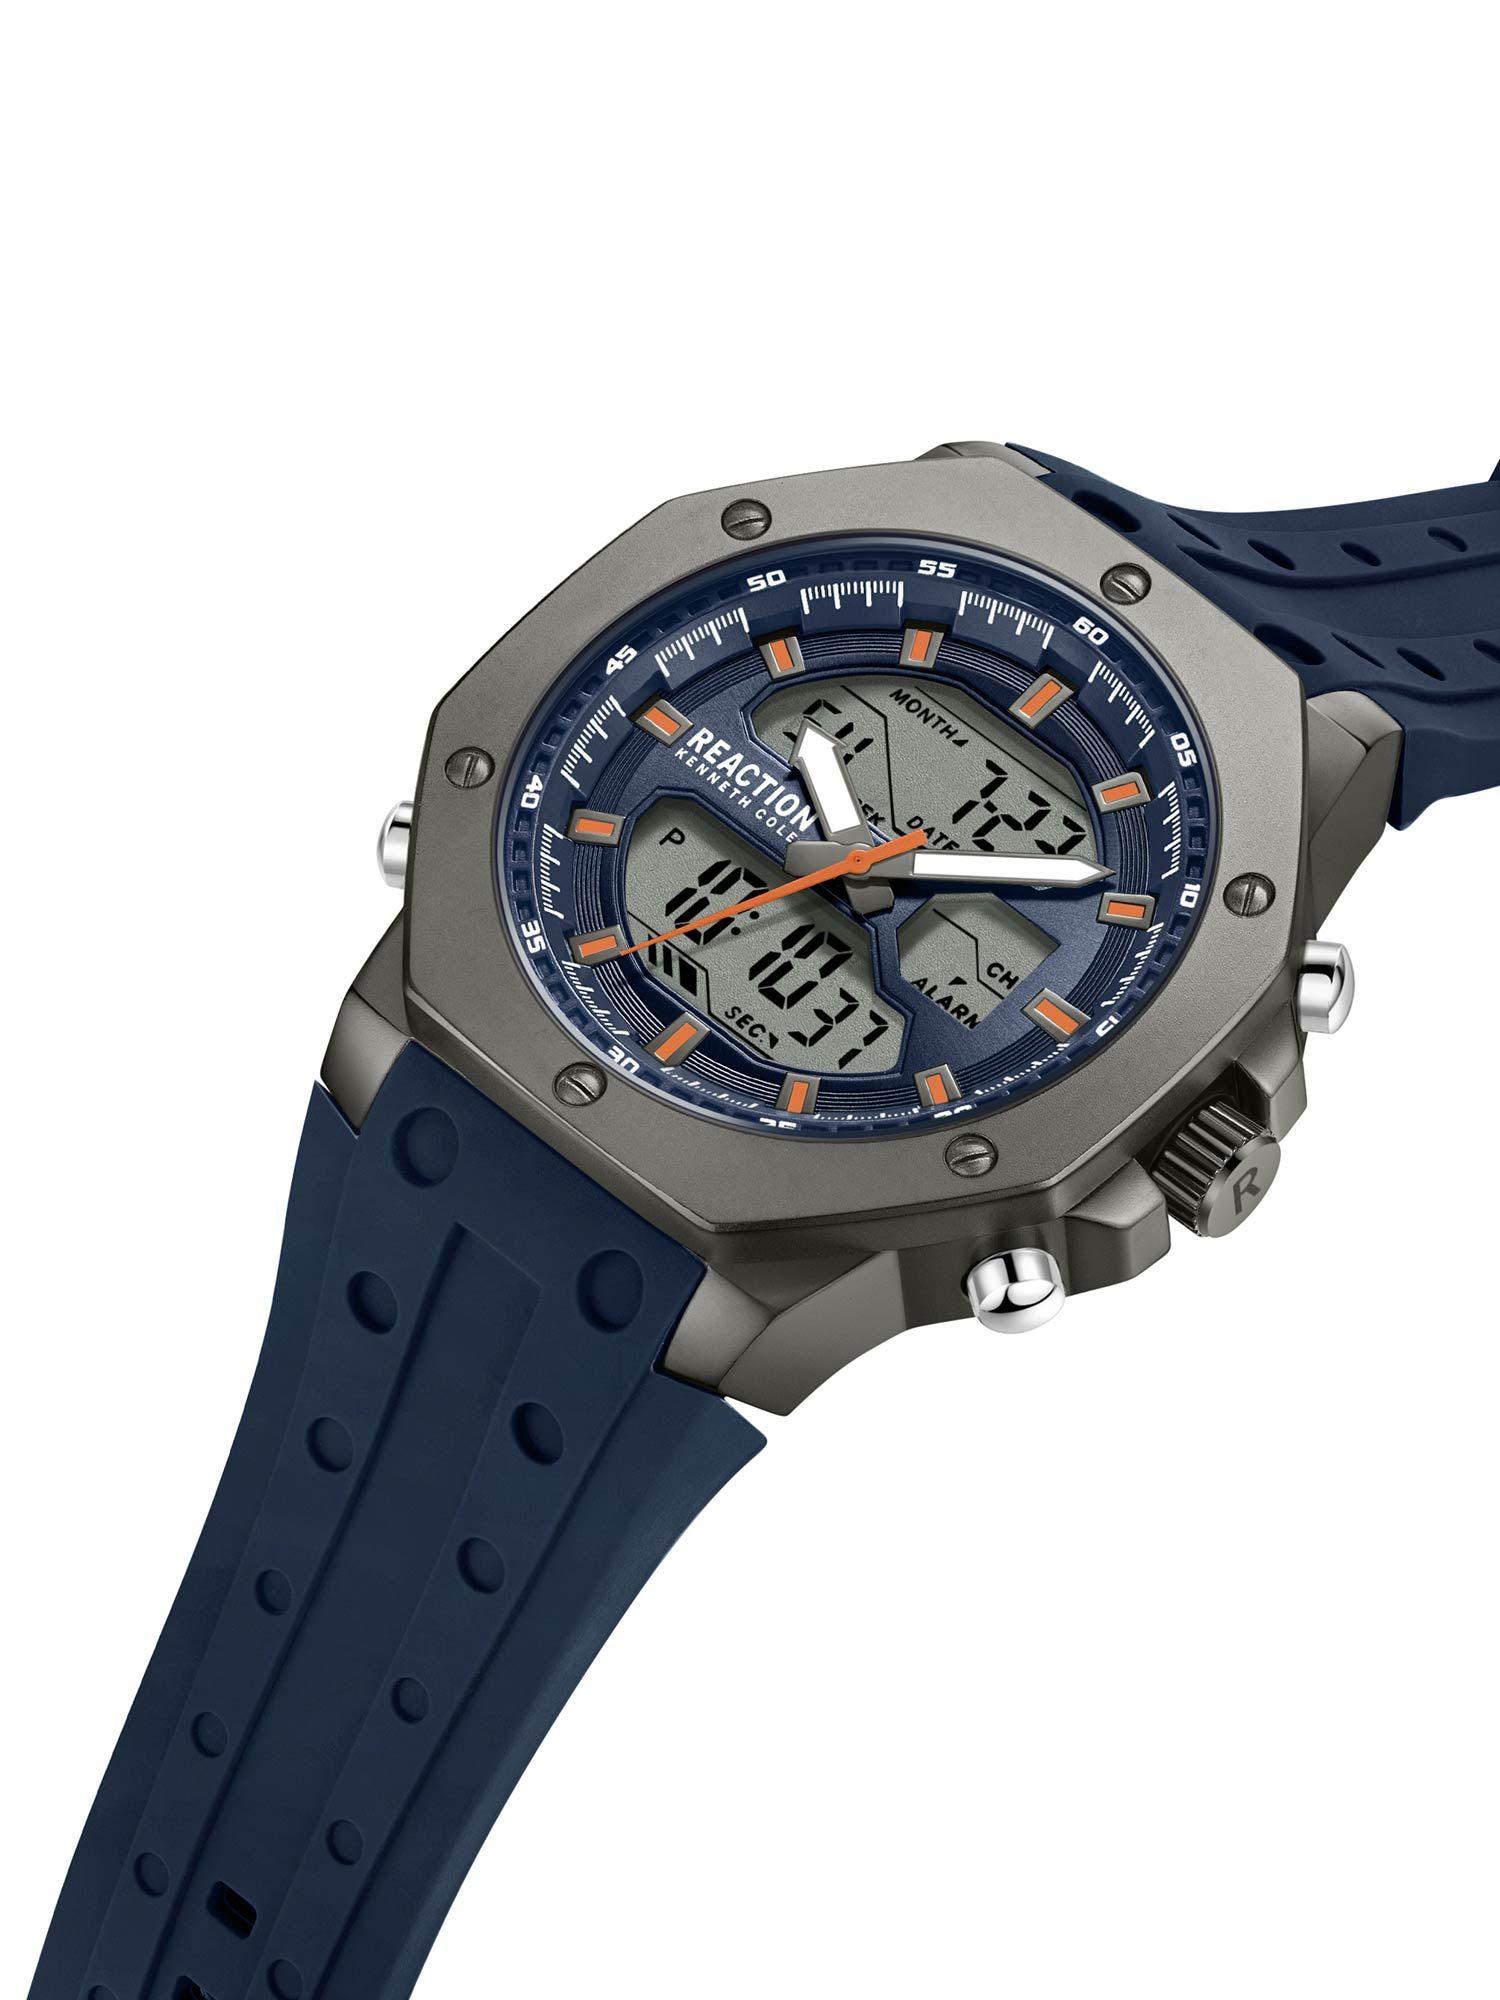 ana-digit blue black silicone strap watch for mens - krwgp9005601